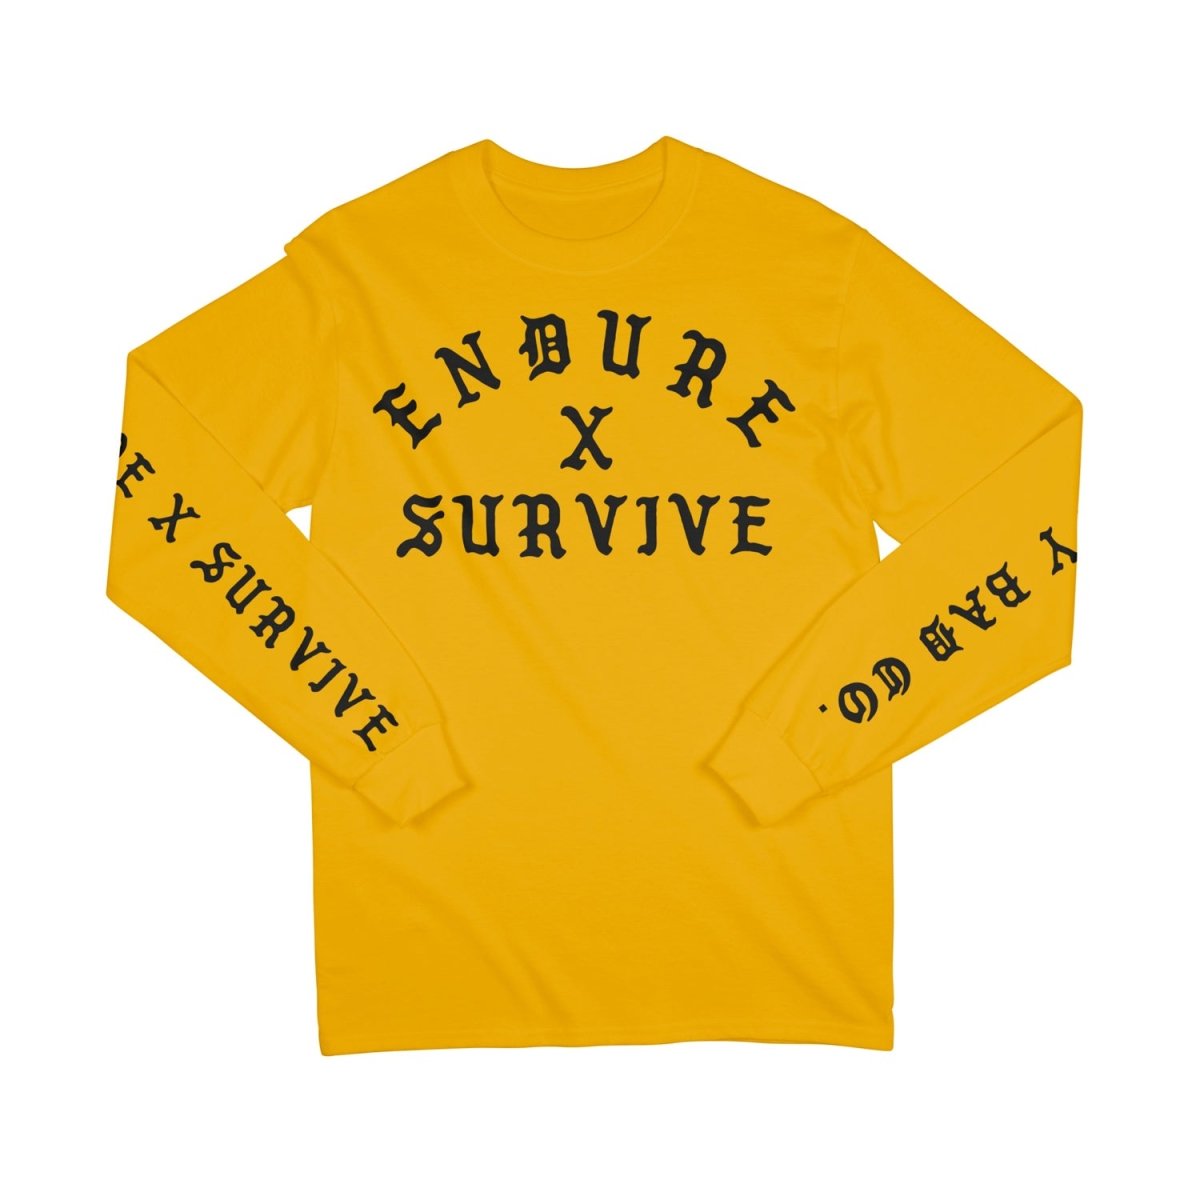 Endure x Survive Long Sleeve T-Shirt Gold - Long Sleeve T-Shirt - Pretty Bad Co.